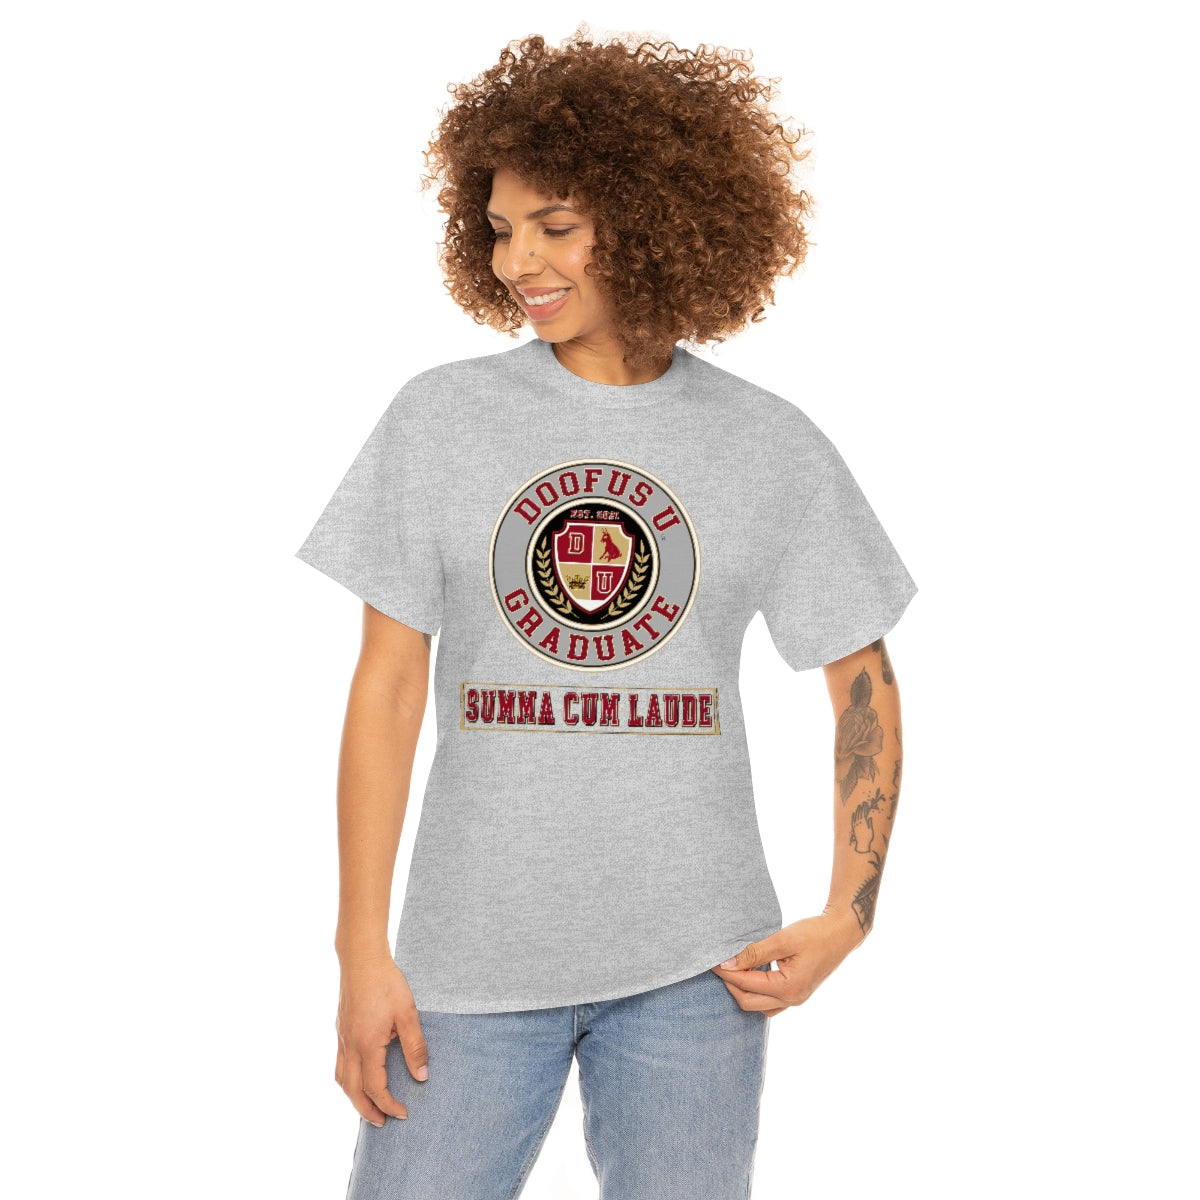 Proud Summa Cum Laude Graduate Doofus University™ Unisex Short Sleeve T-Shirt